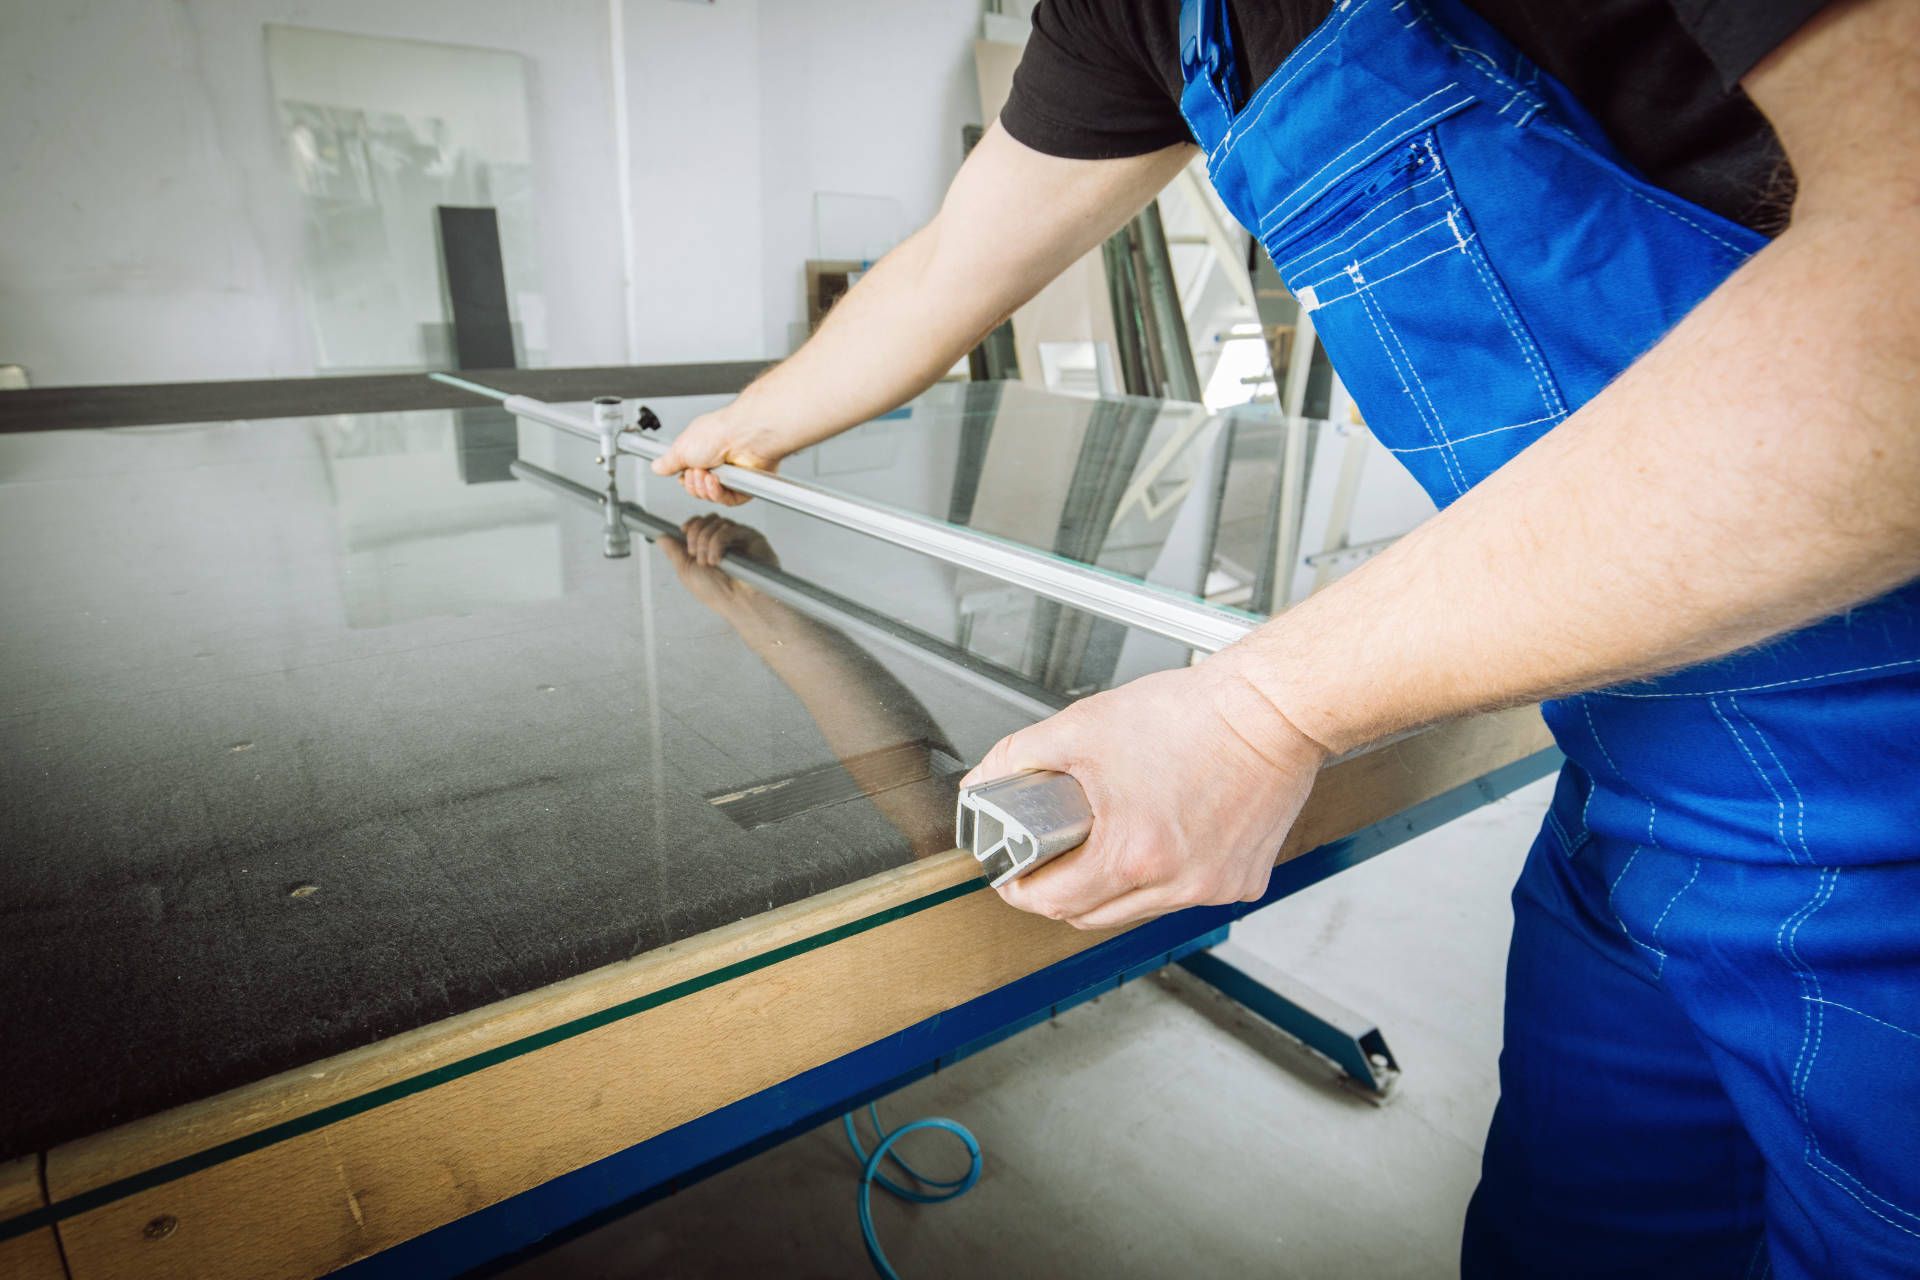 Glazier cutting glass on table